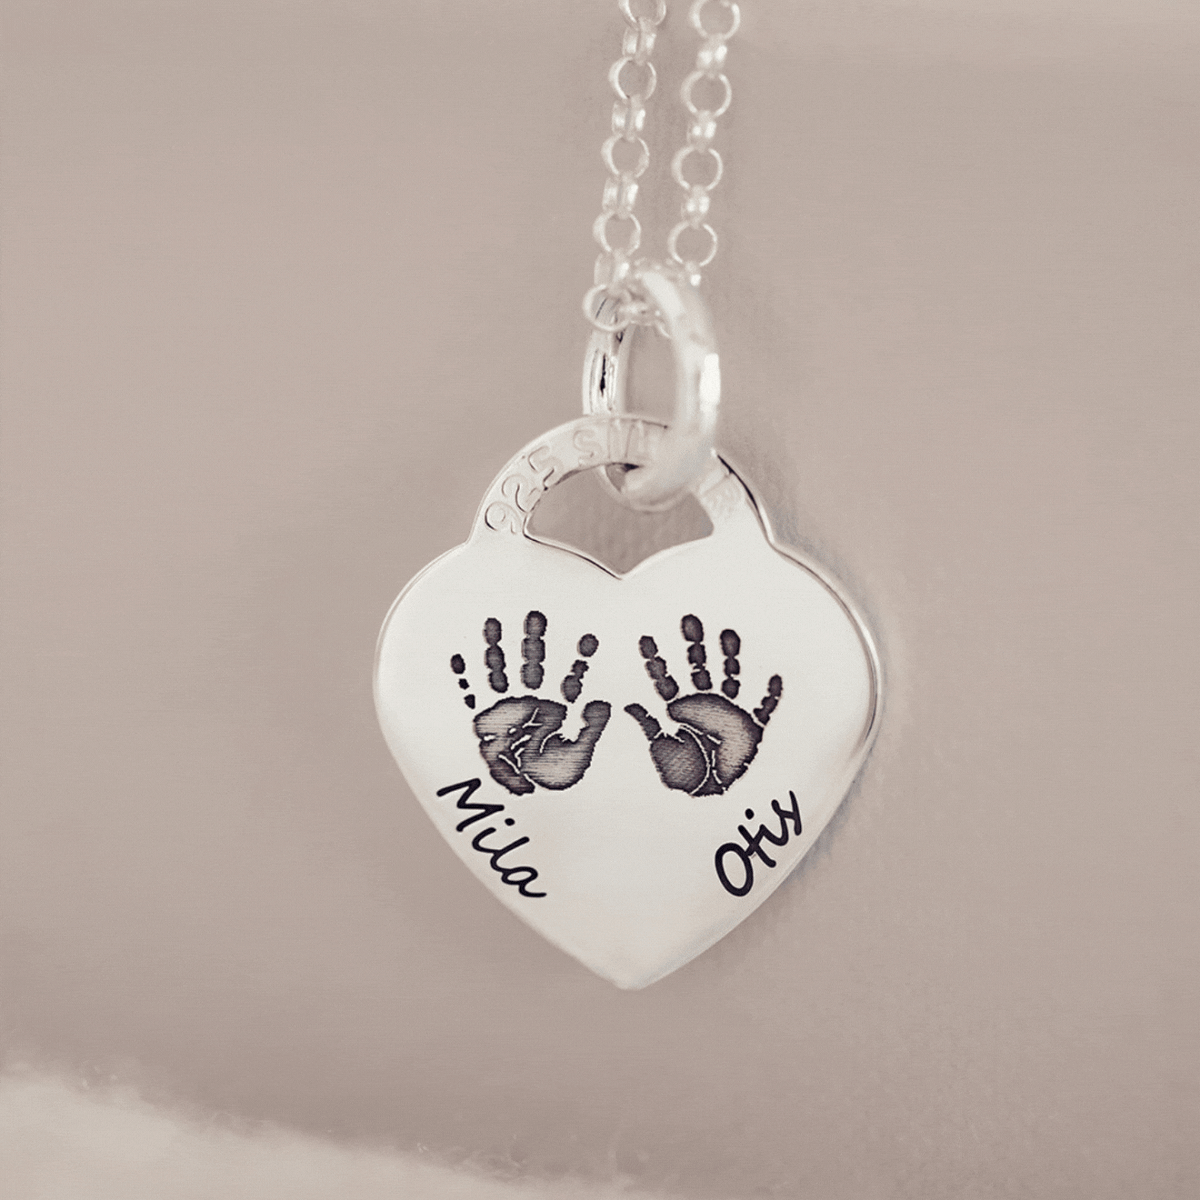 handprint-heart-necklace-with-your-children-s-handprints